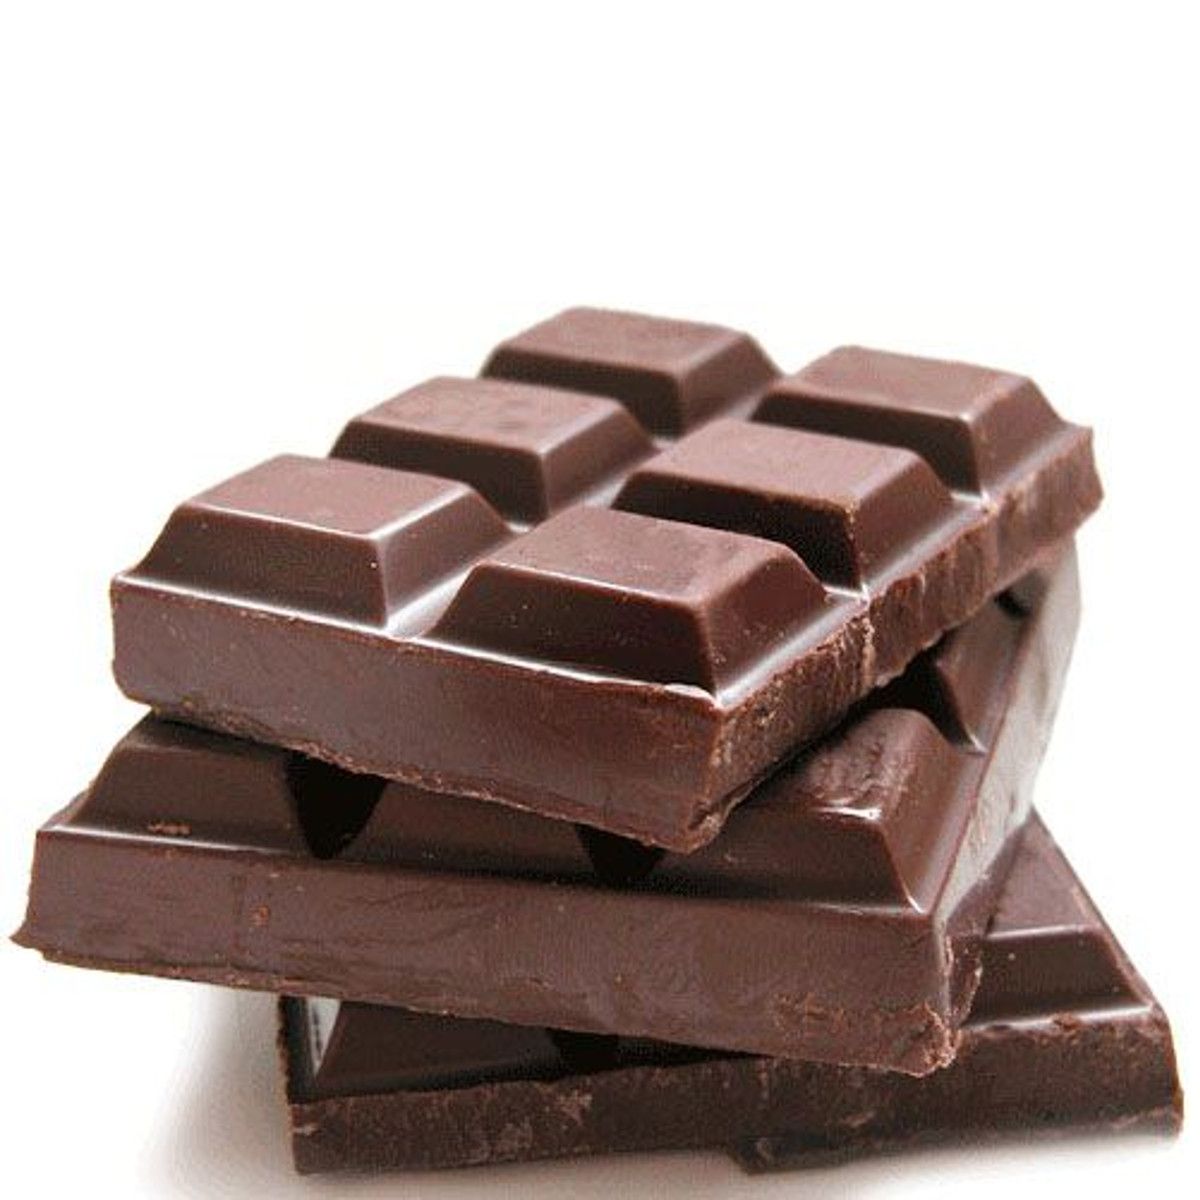 Chocolate-Mold-Mould-Bar-Break-Apart-Choc-Block-Ice-Tray-Silicone-Cake-Baking-Mold-1443733